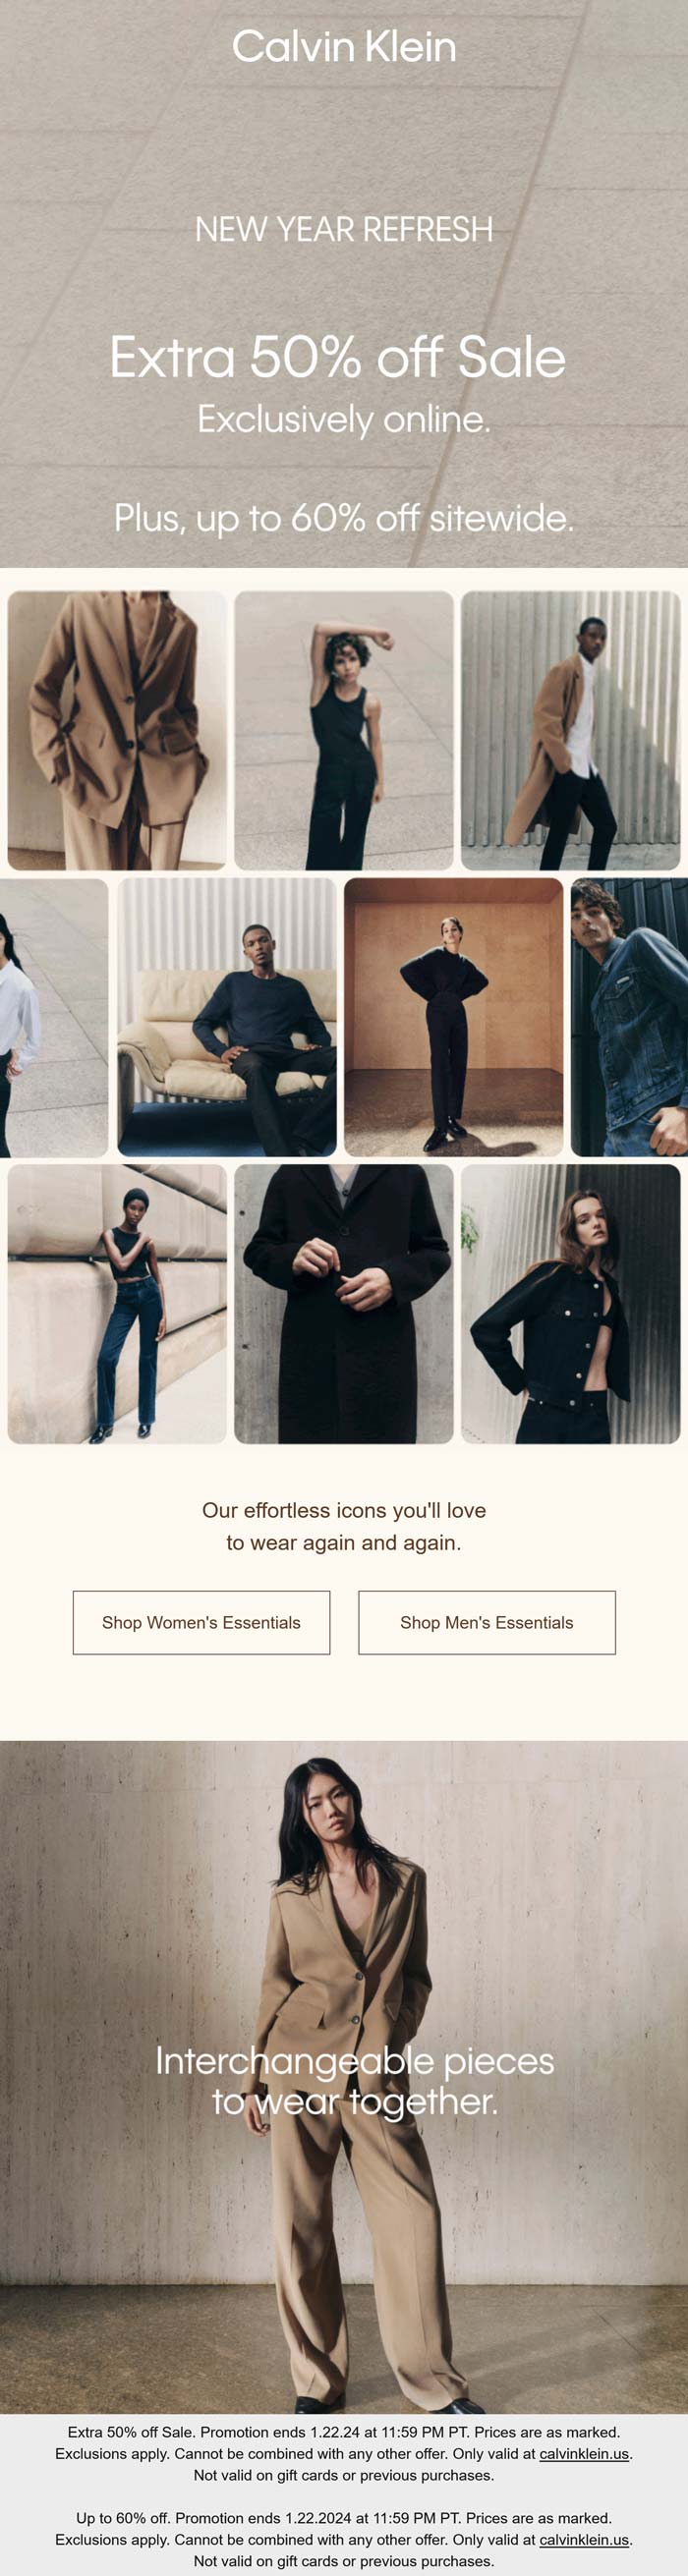 Calvin Klein stores Coupon  Extra 50% off sale items & more online at Calvin Klein #calvinklein 